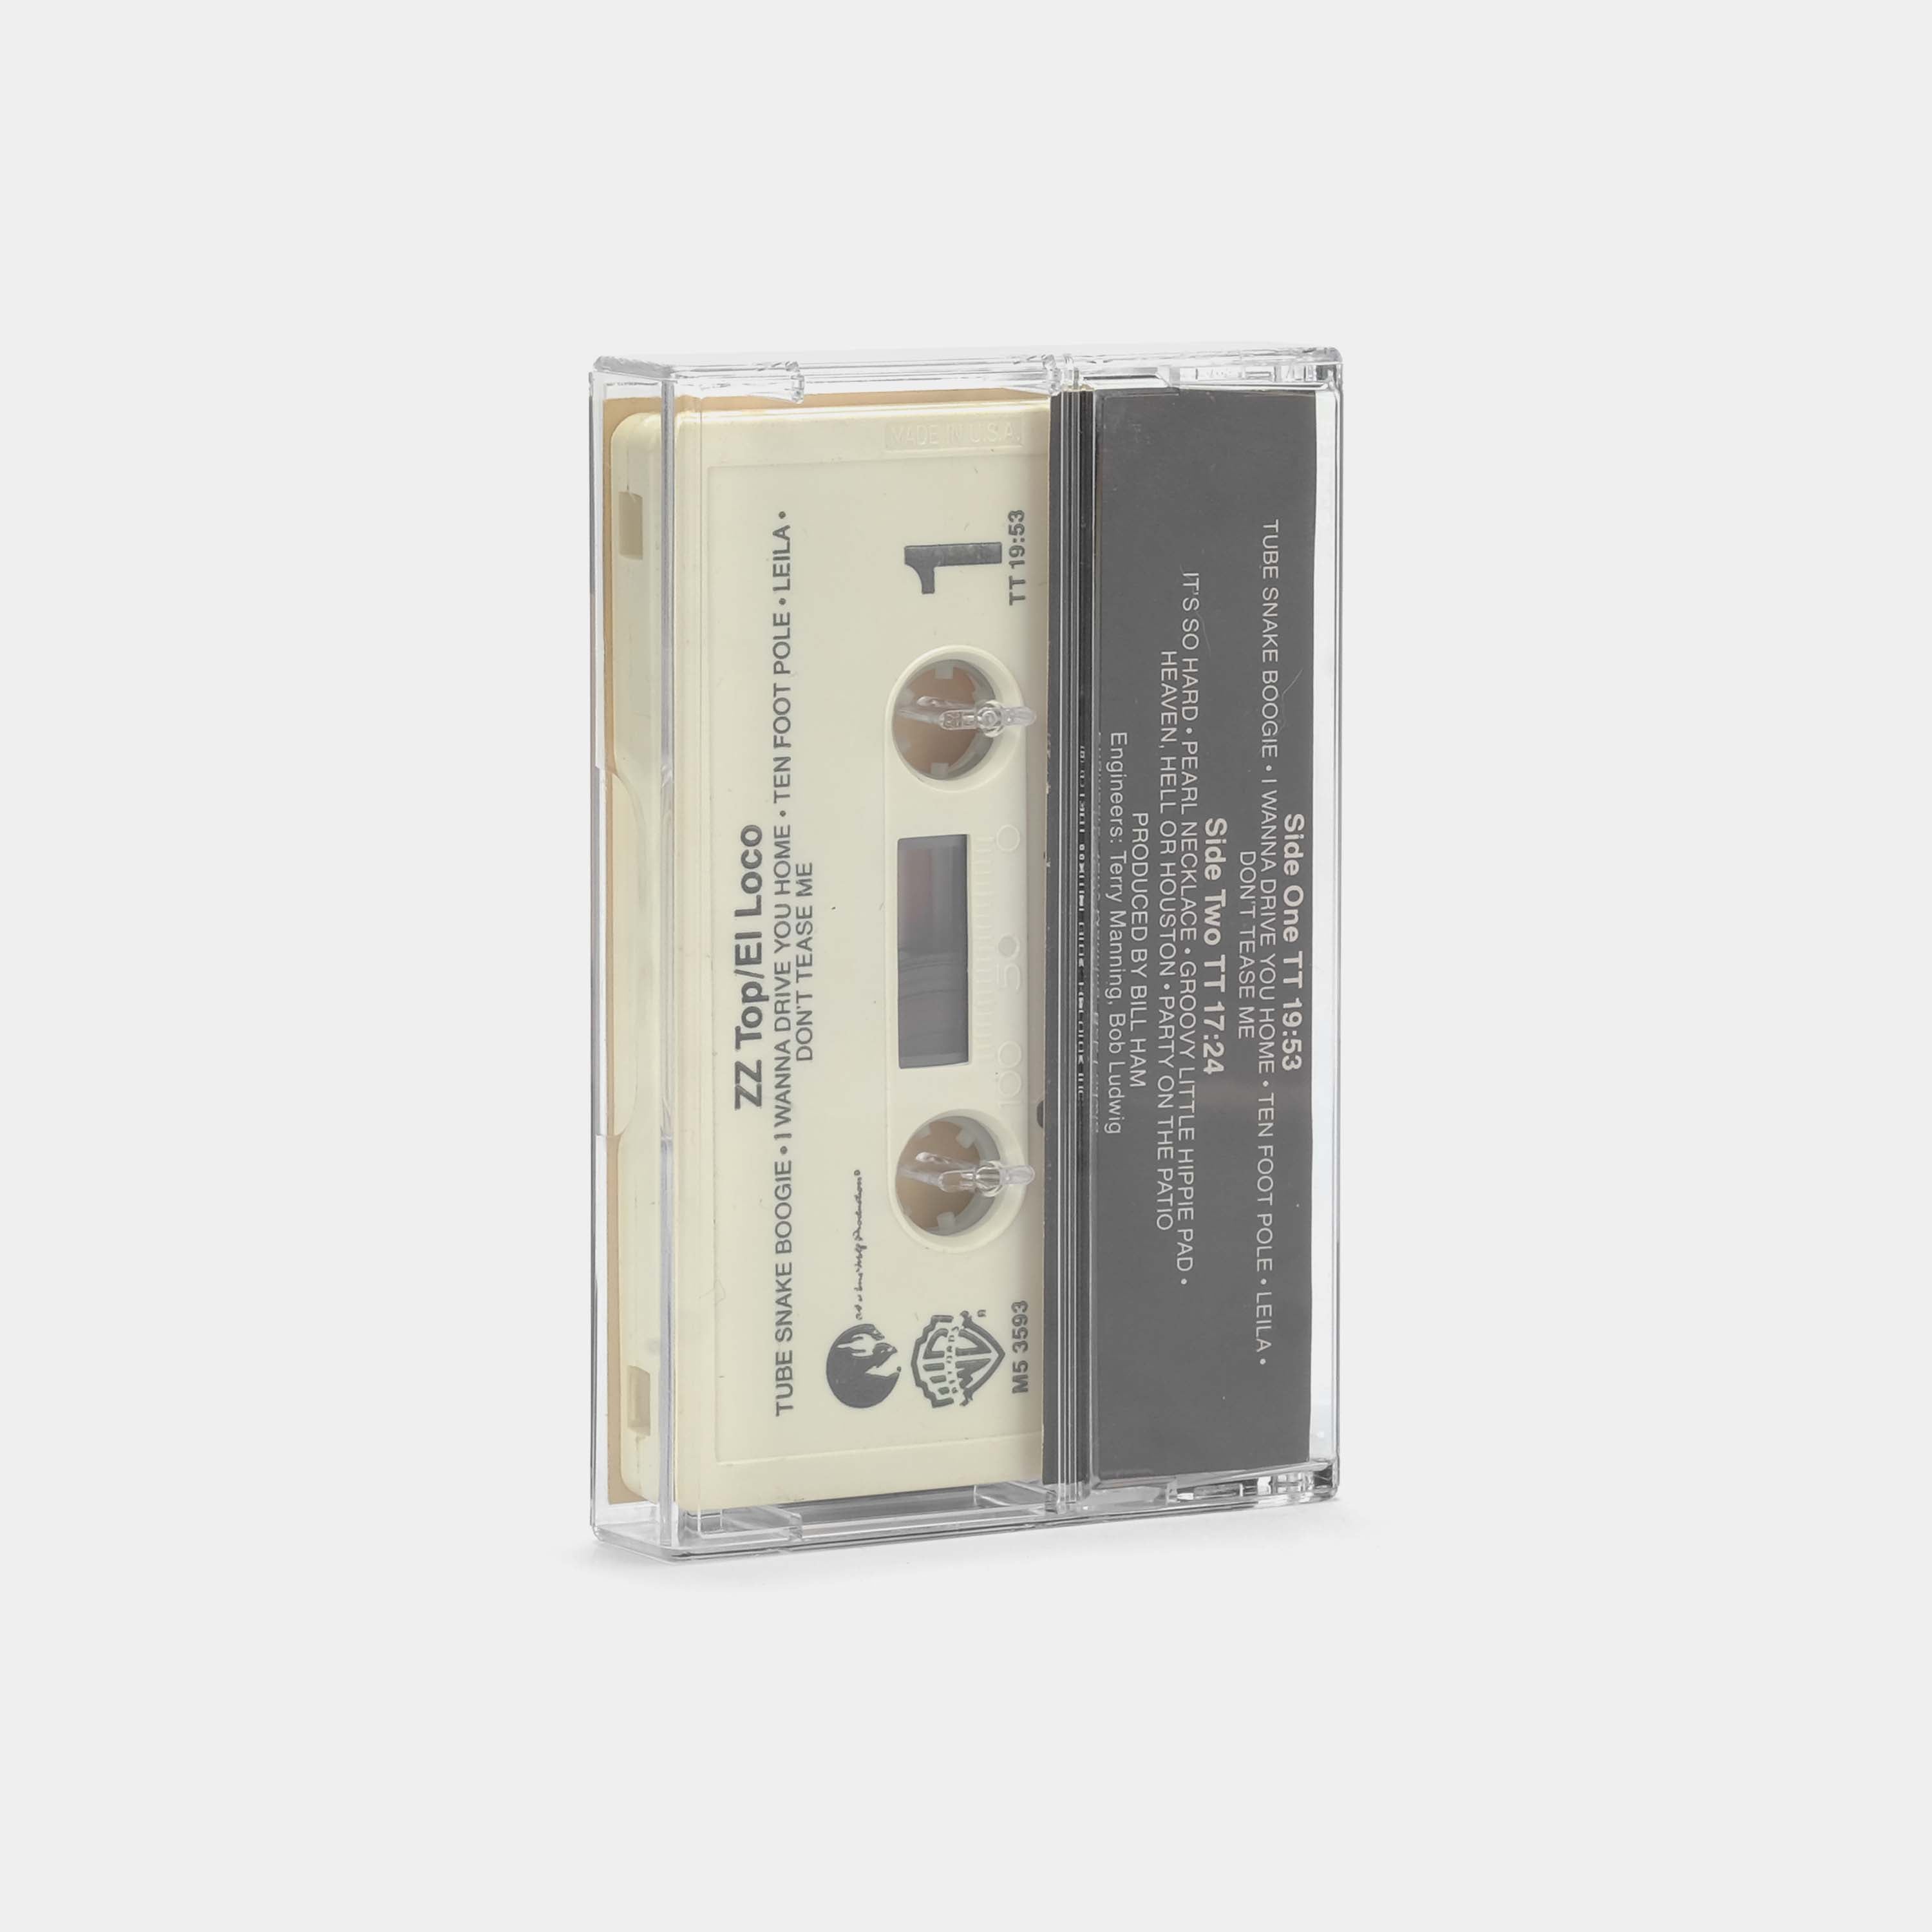 ZZ Top - El Loco Cassette Tape